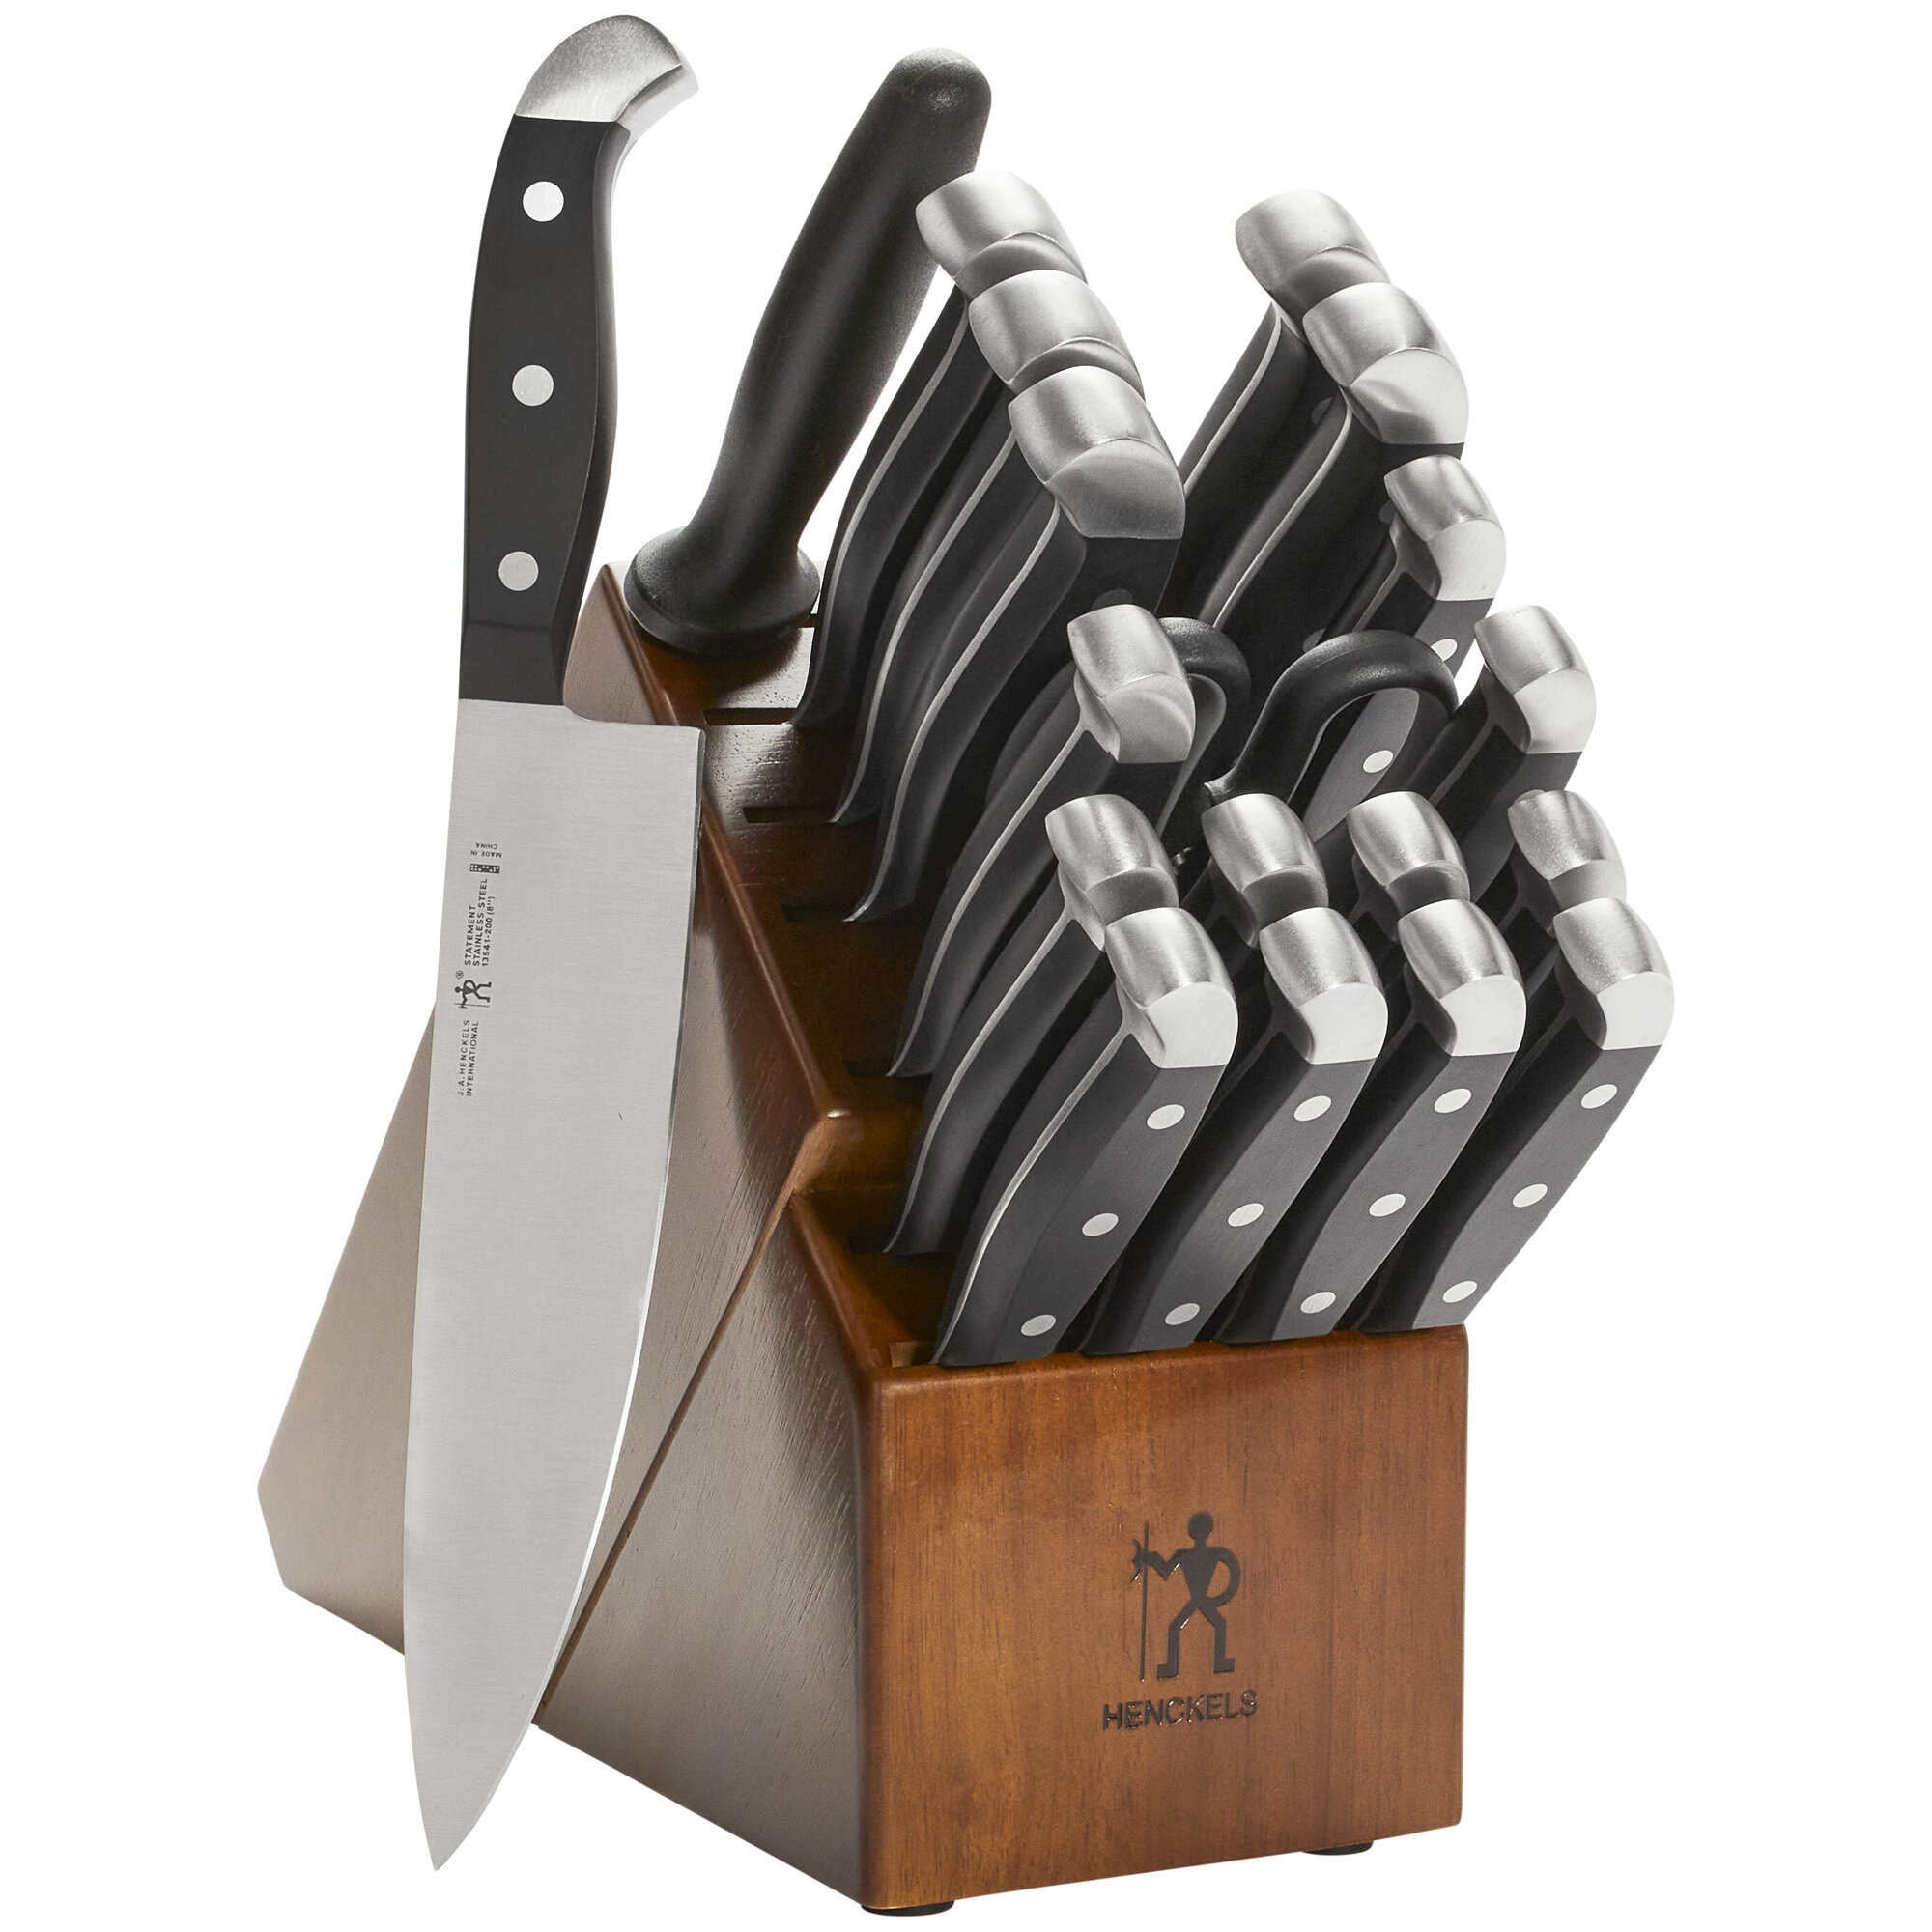 Henckels Classic 20-pc Self-Sharpening Knife Block Set